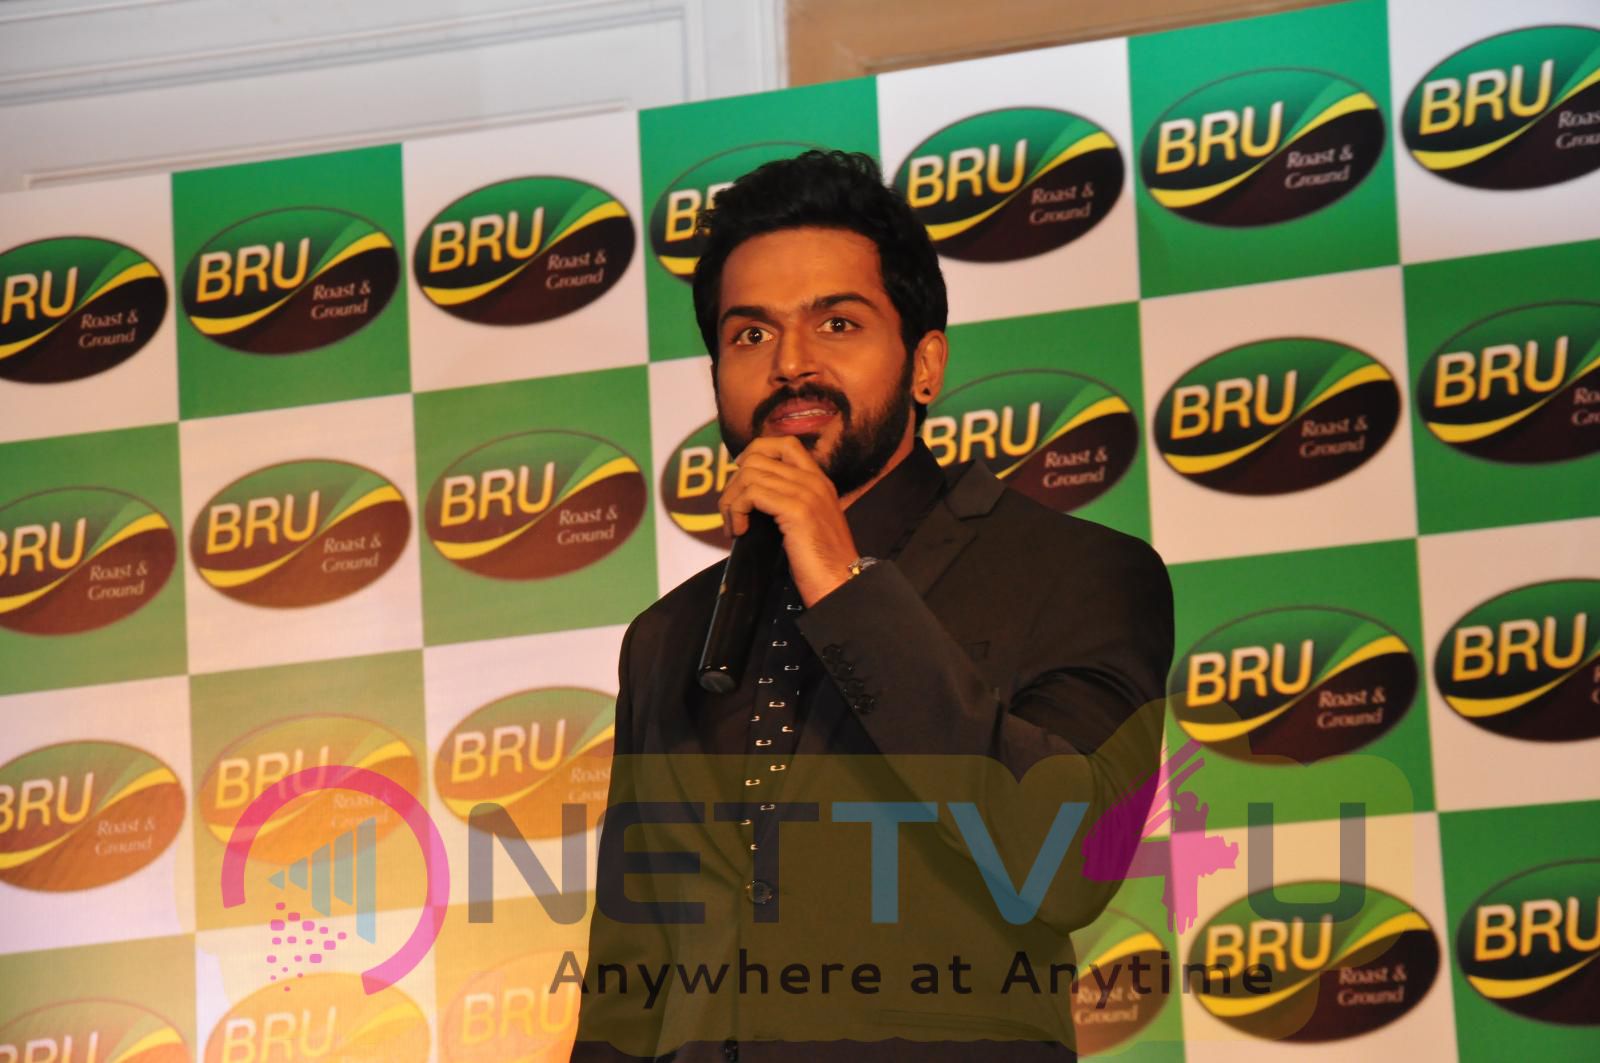 Actor Karthi Launches The New Pack Of BRU Roast & Ground Stills Telugu Gallery